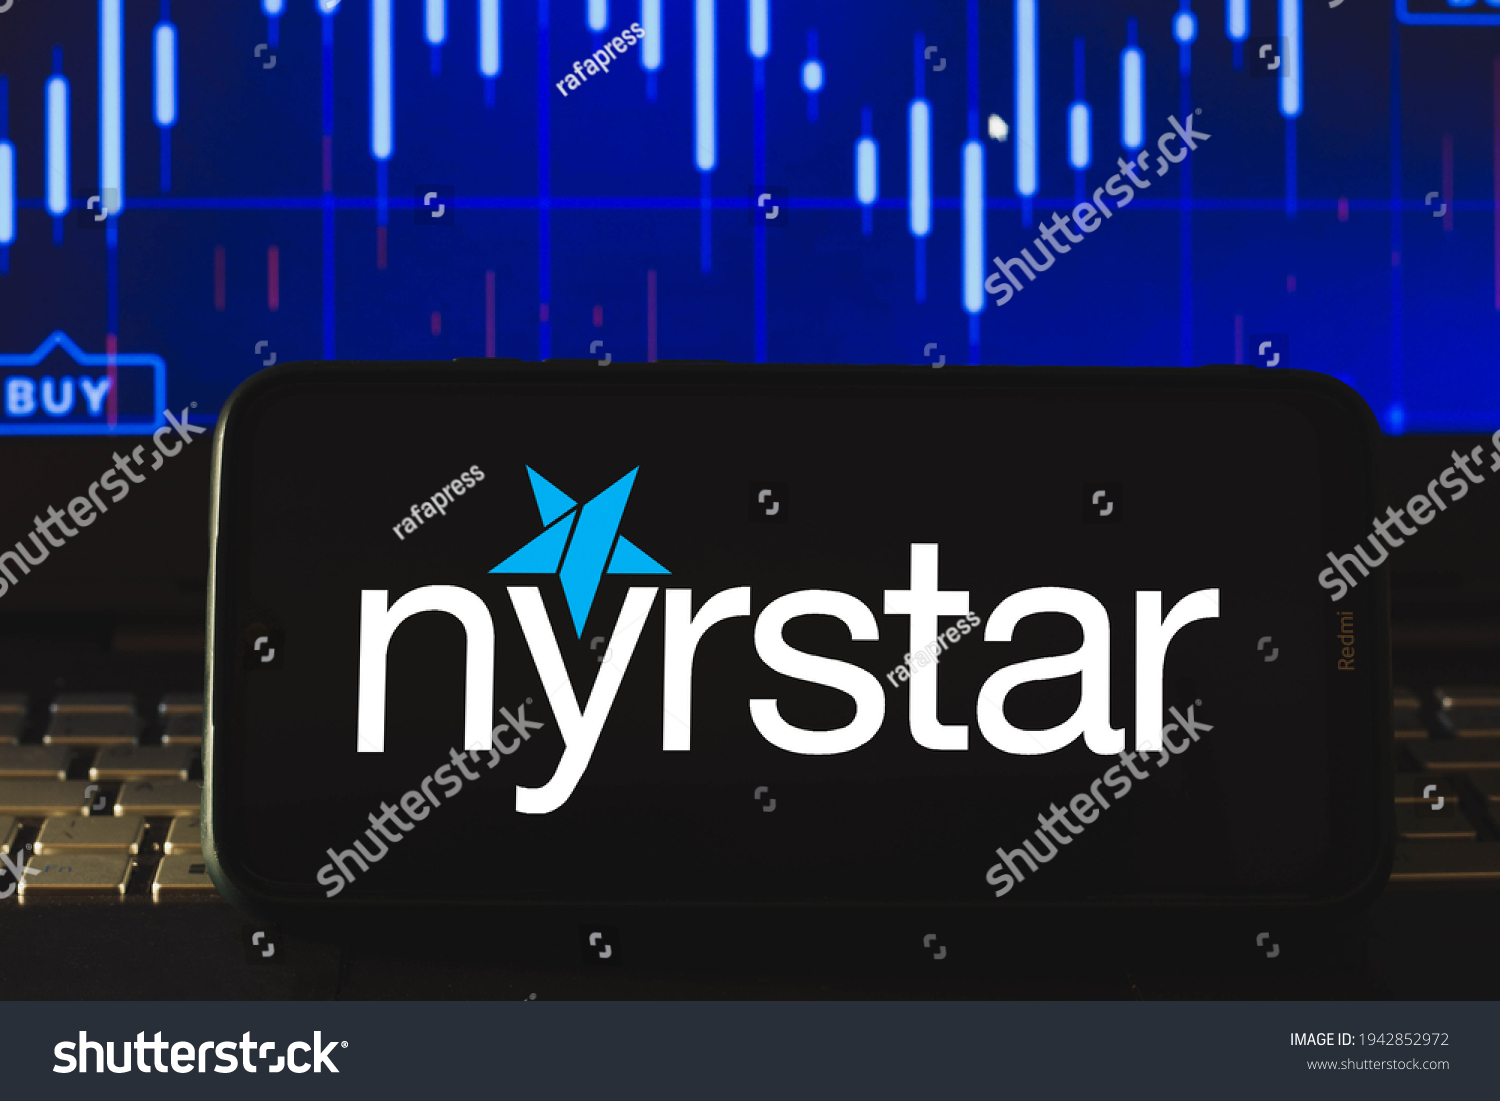 Nyrstar Images, Stock Photos & Vectors Shutterstock